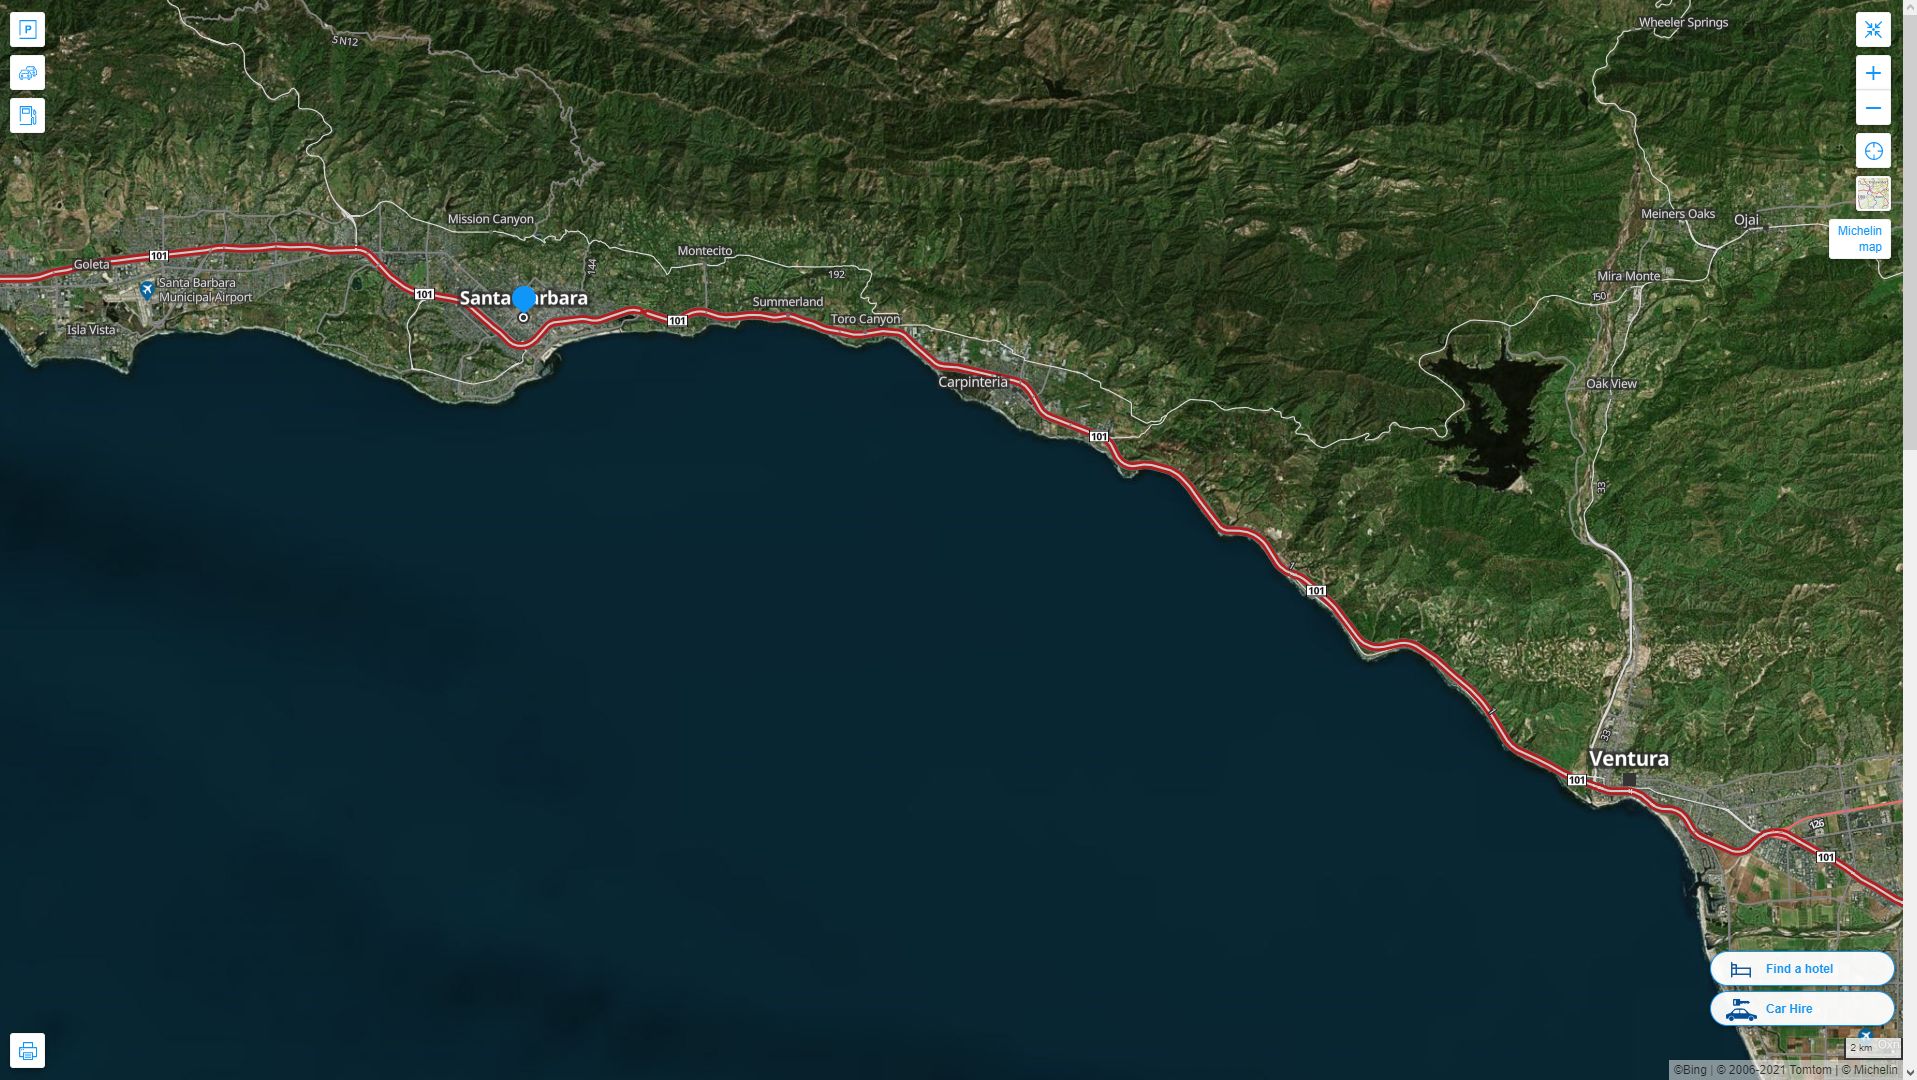 Santa Barbara California Highway and Road Map with Satellite View